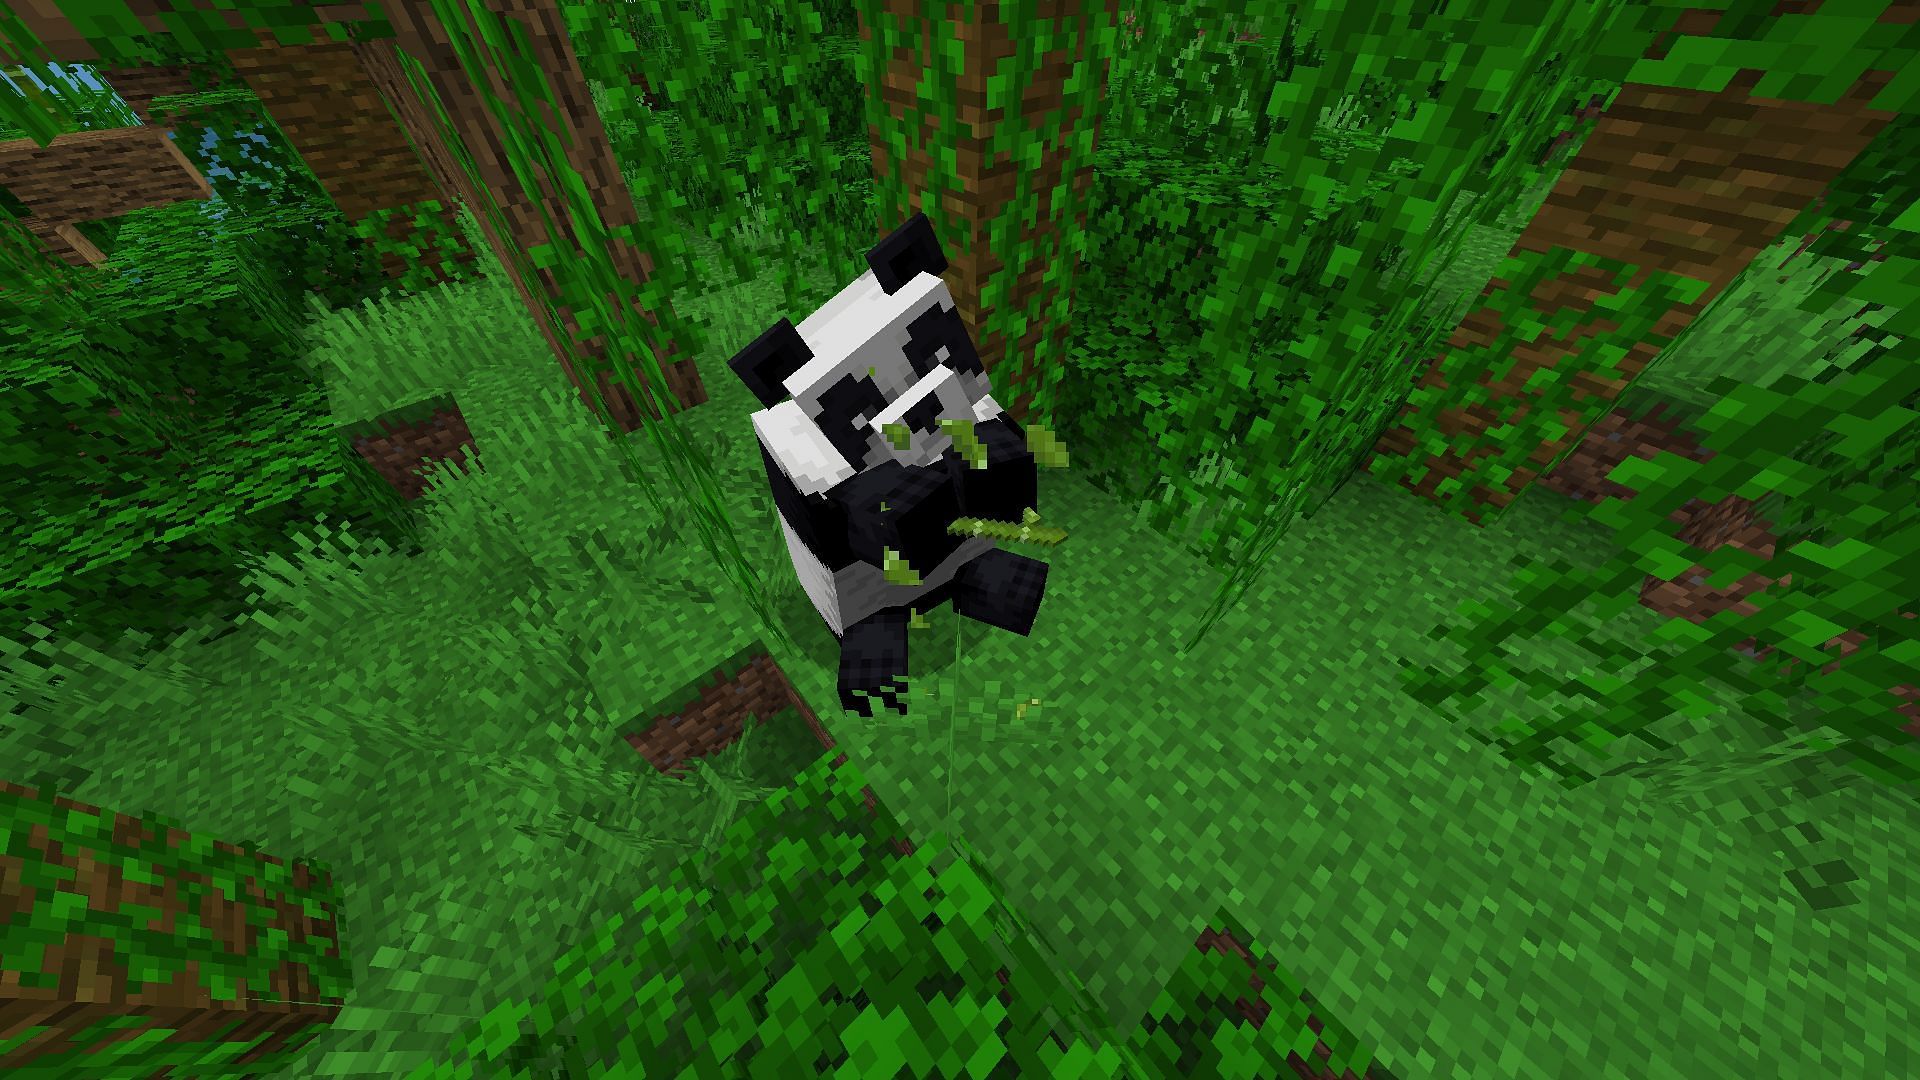 Pandas eat bamboo to enter love or breeding mode in the game (Image via Mojang)